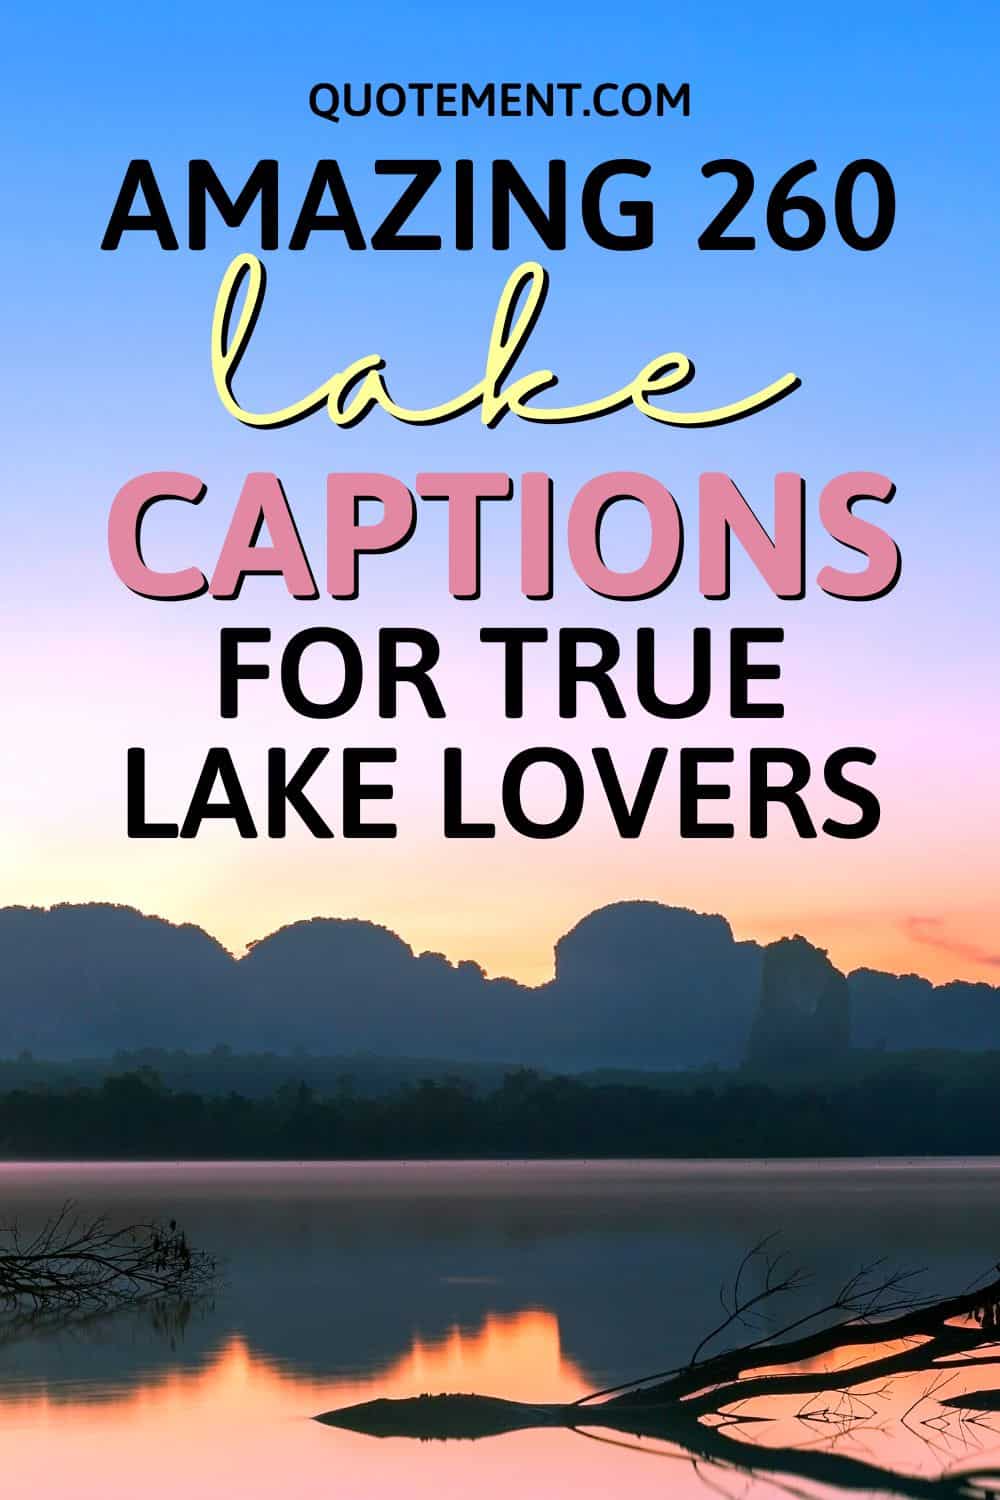 260 Amazing Lake Captions For True Lake Lovers To Enjoy